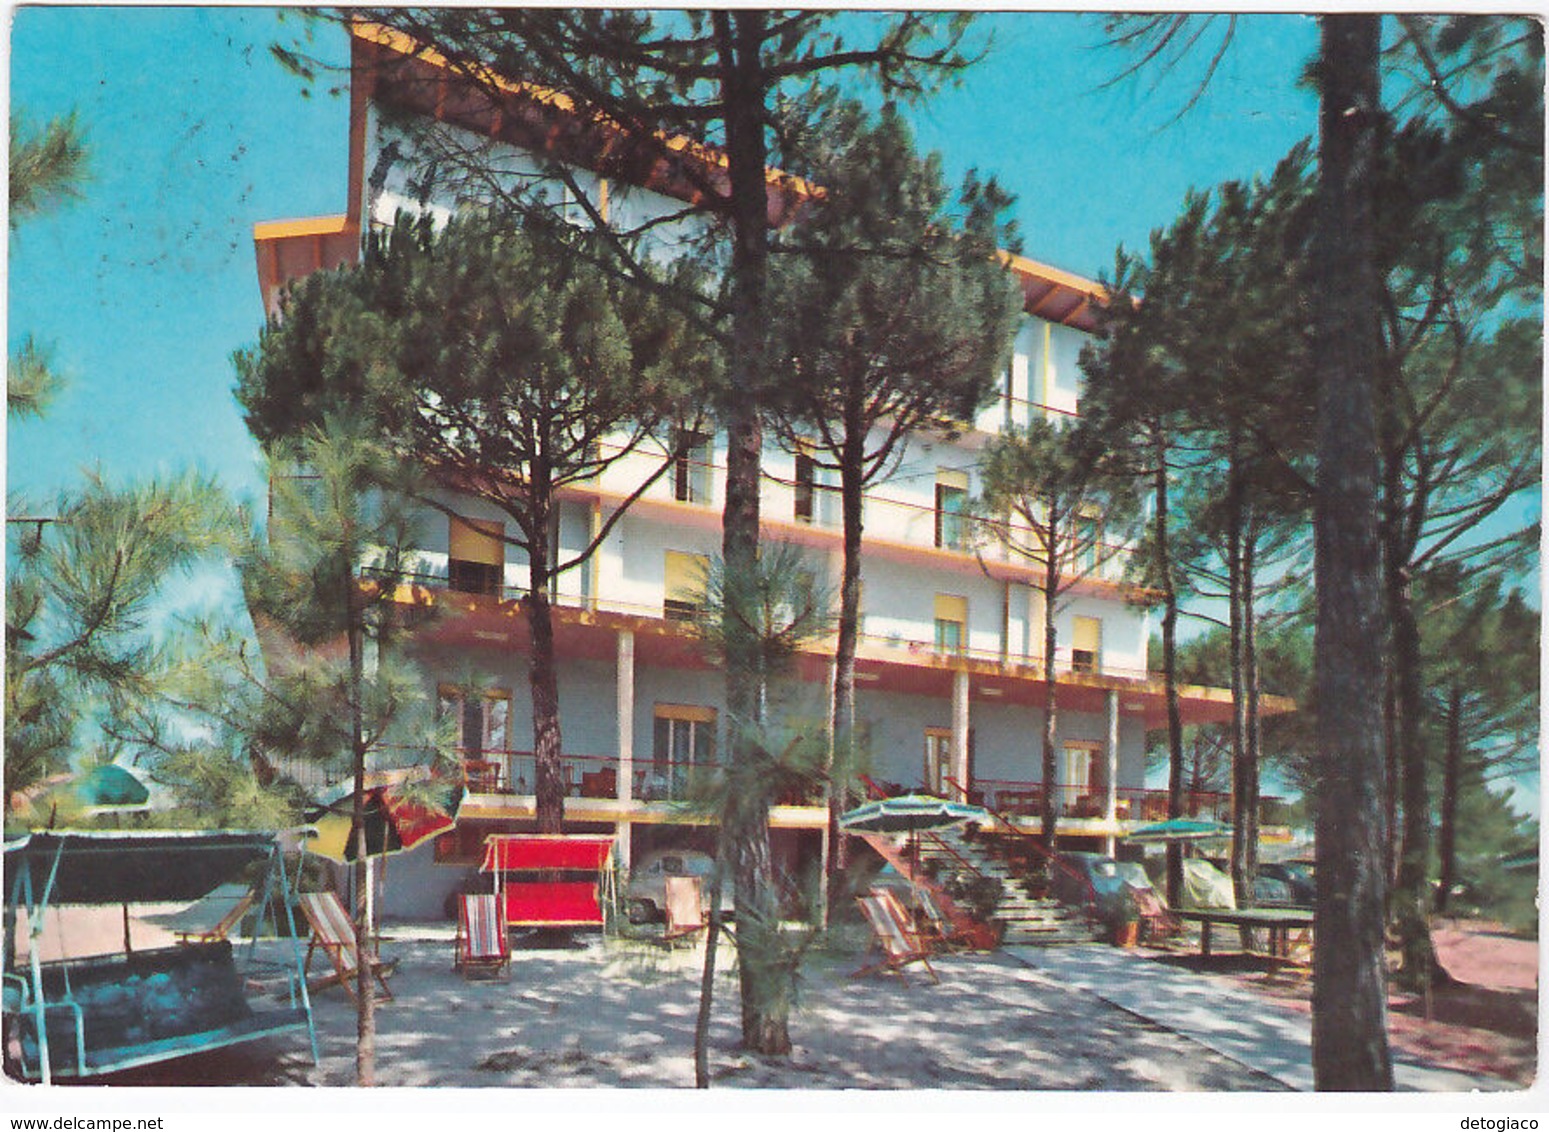 MILANO MARITTIMA (CERVIA) - RAVENNA - HOTEL S. MARCO - VIAGG. 1963 -56494- - Ravenna